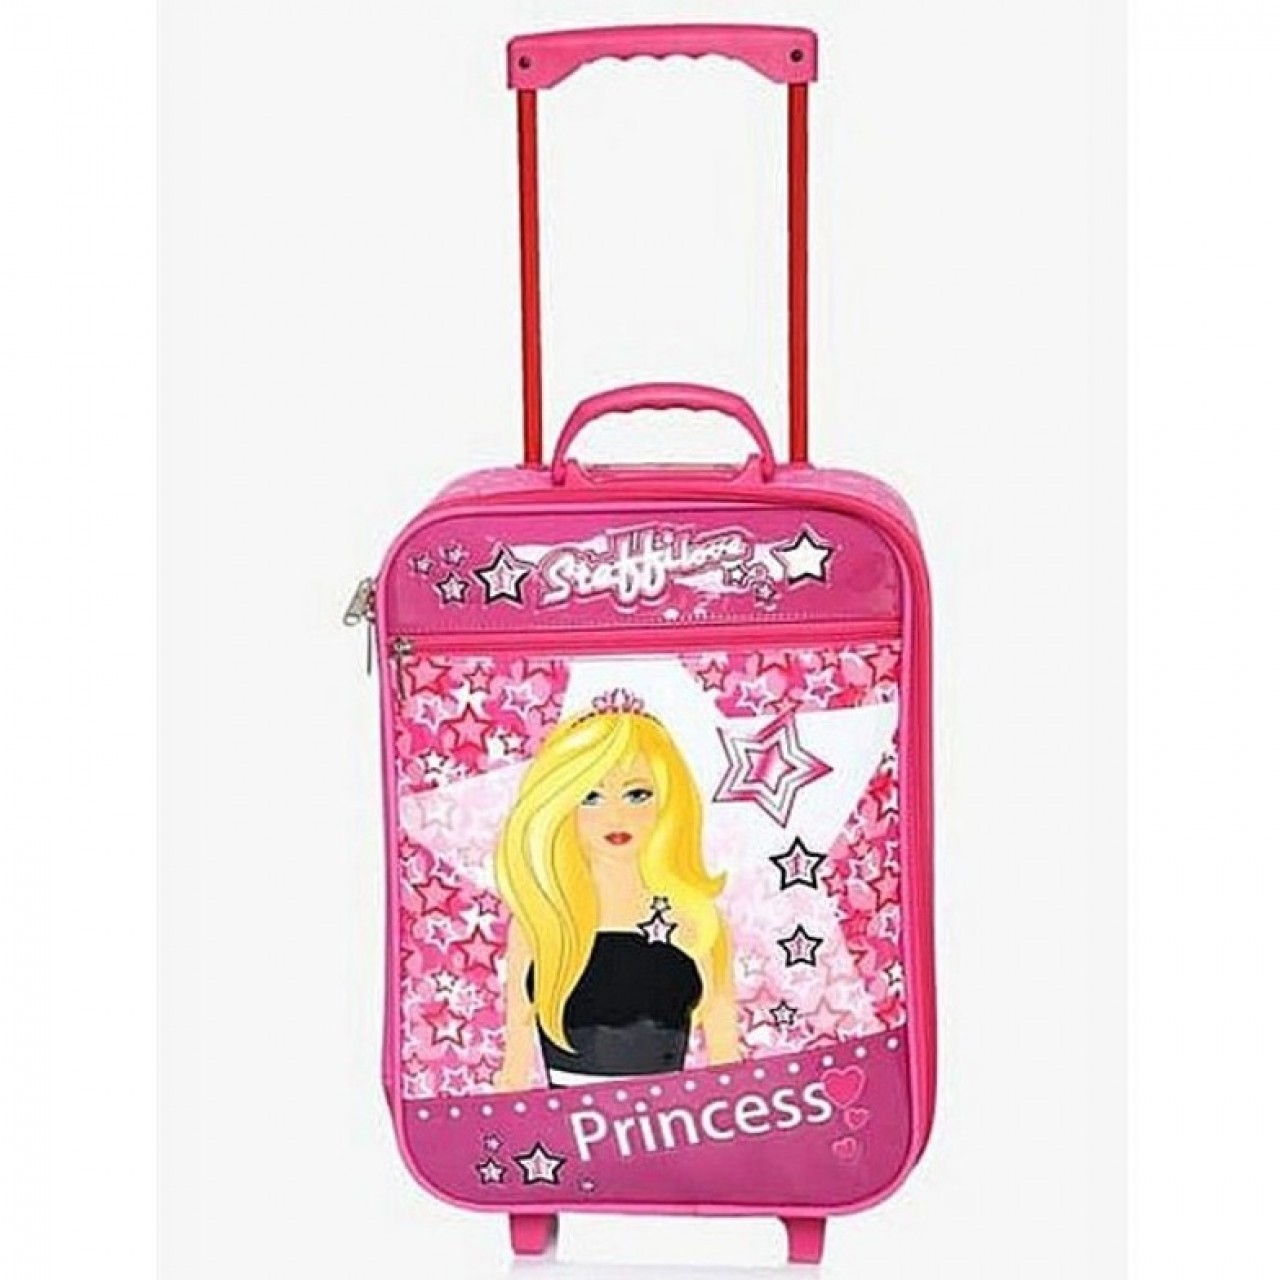 Barbie Style Slider School Bag For Kids - Nursery Prep Class